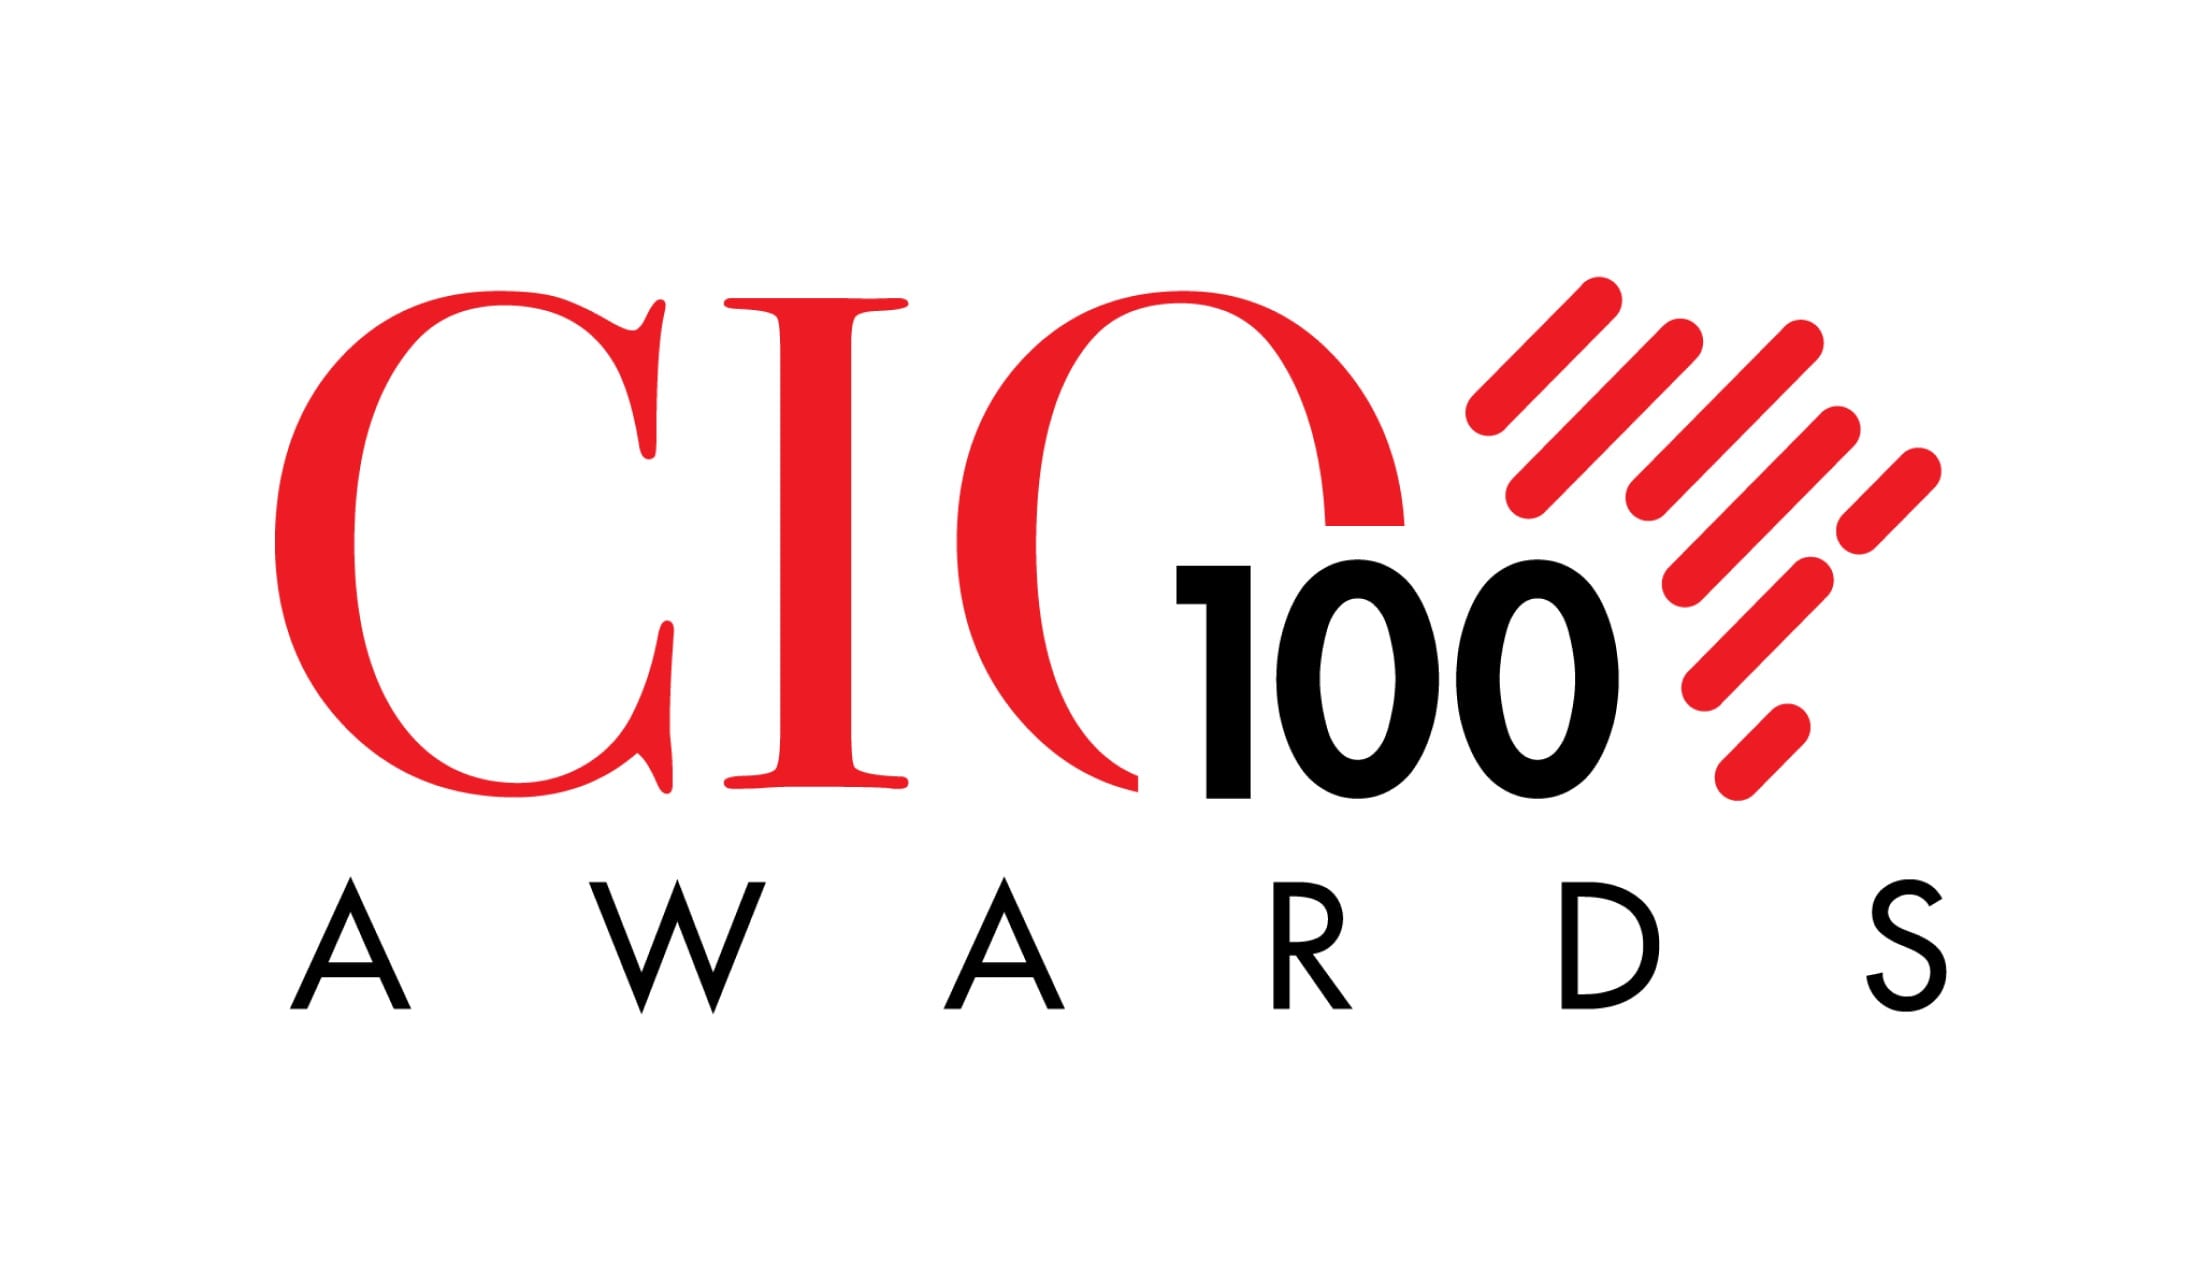 160 companies shortlisted for the 2021 CIO100 Awards